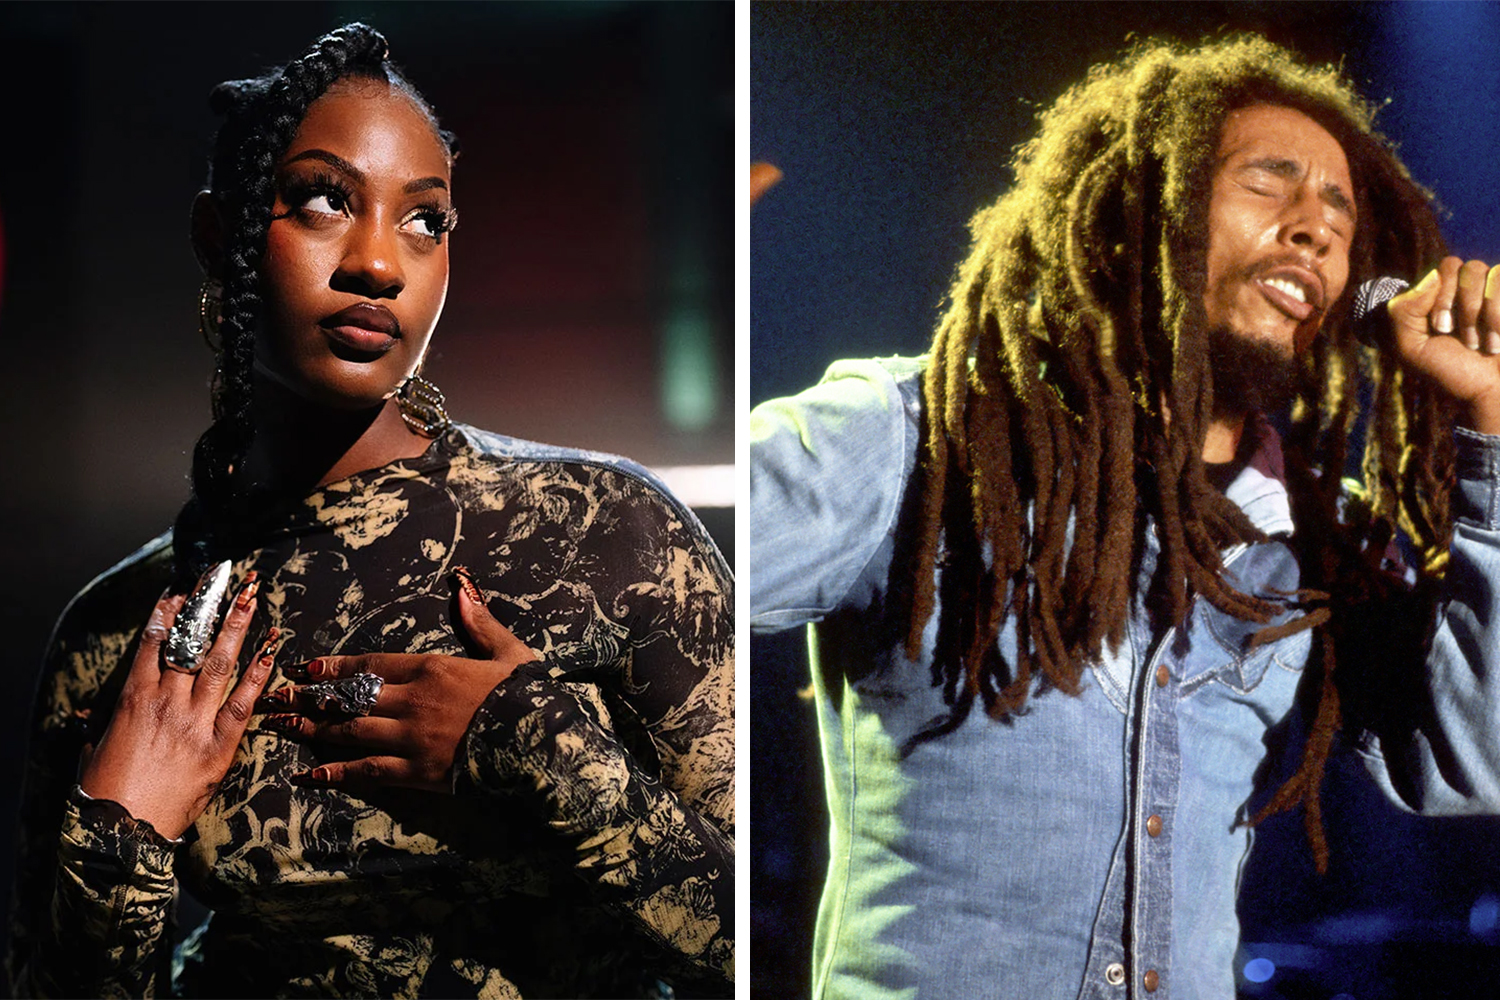 Bob Marley & The Wailers – No Woman, No Cry Lyrics